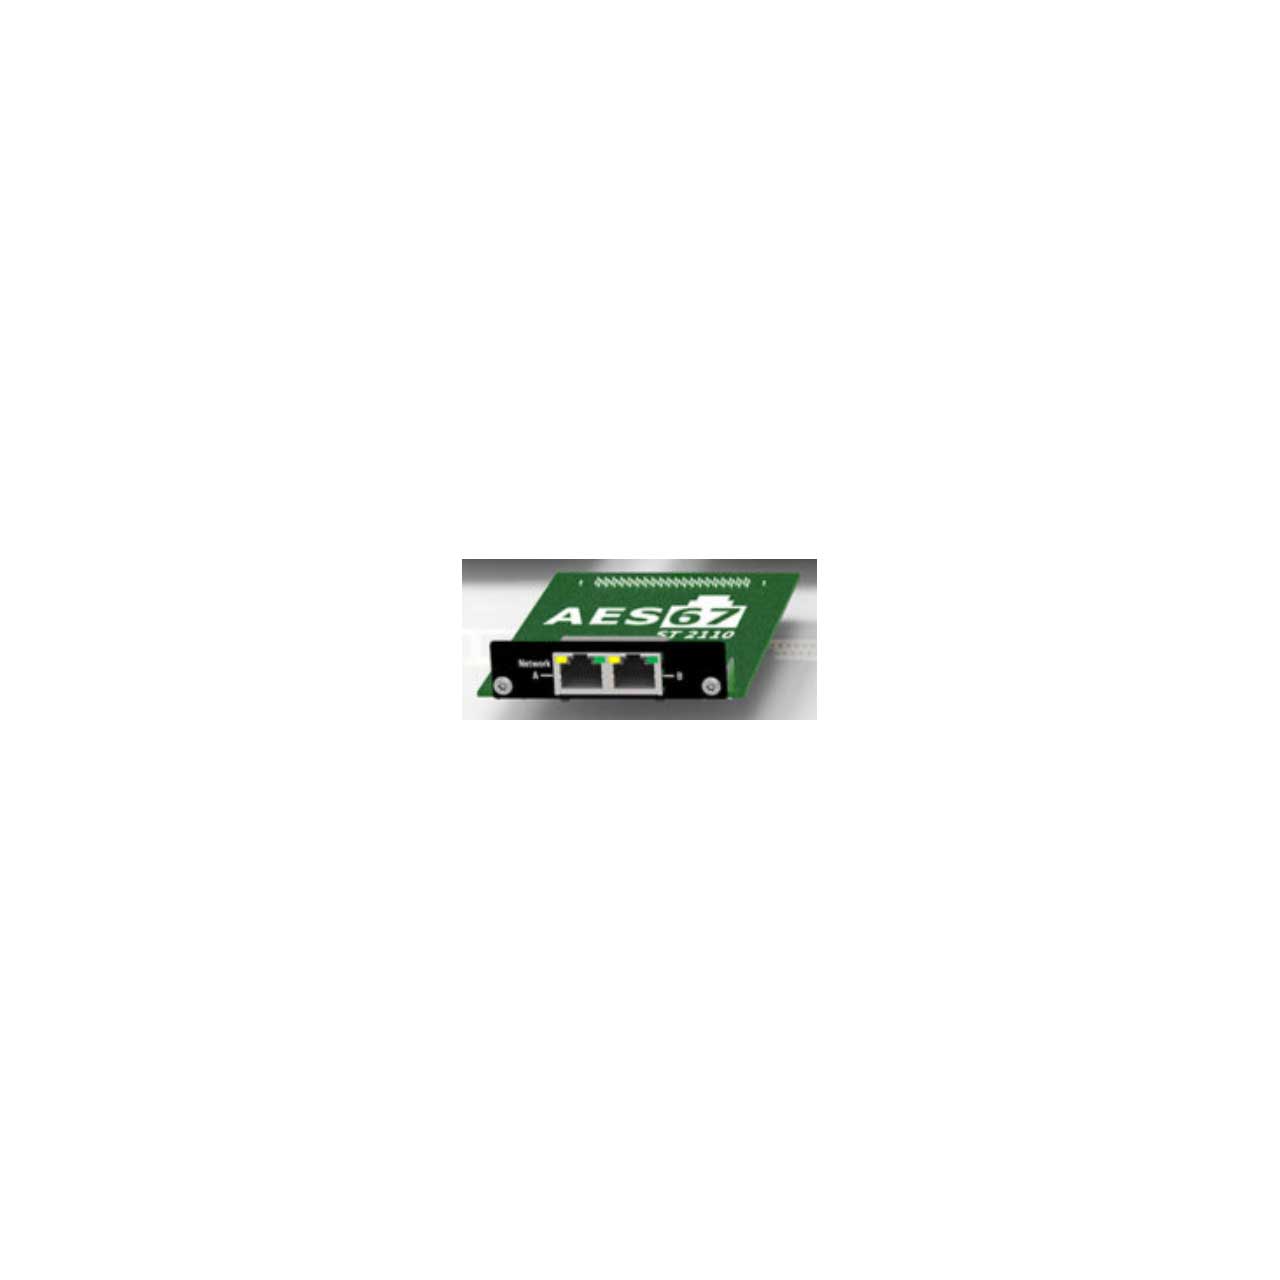 Appsys Pro Audio AUX AES67 64 x 64 Channel AES67 Card for Flexiverter Converters AUX-AES67